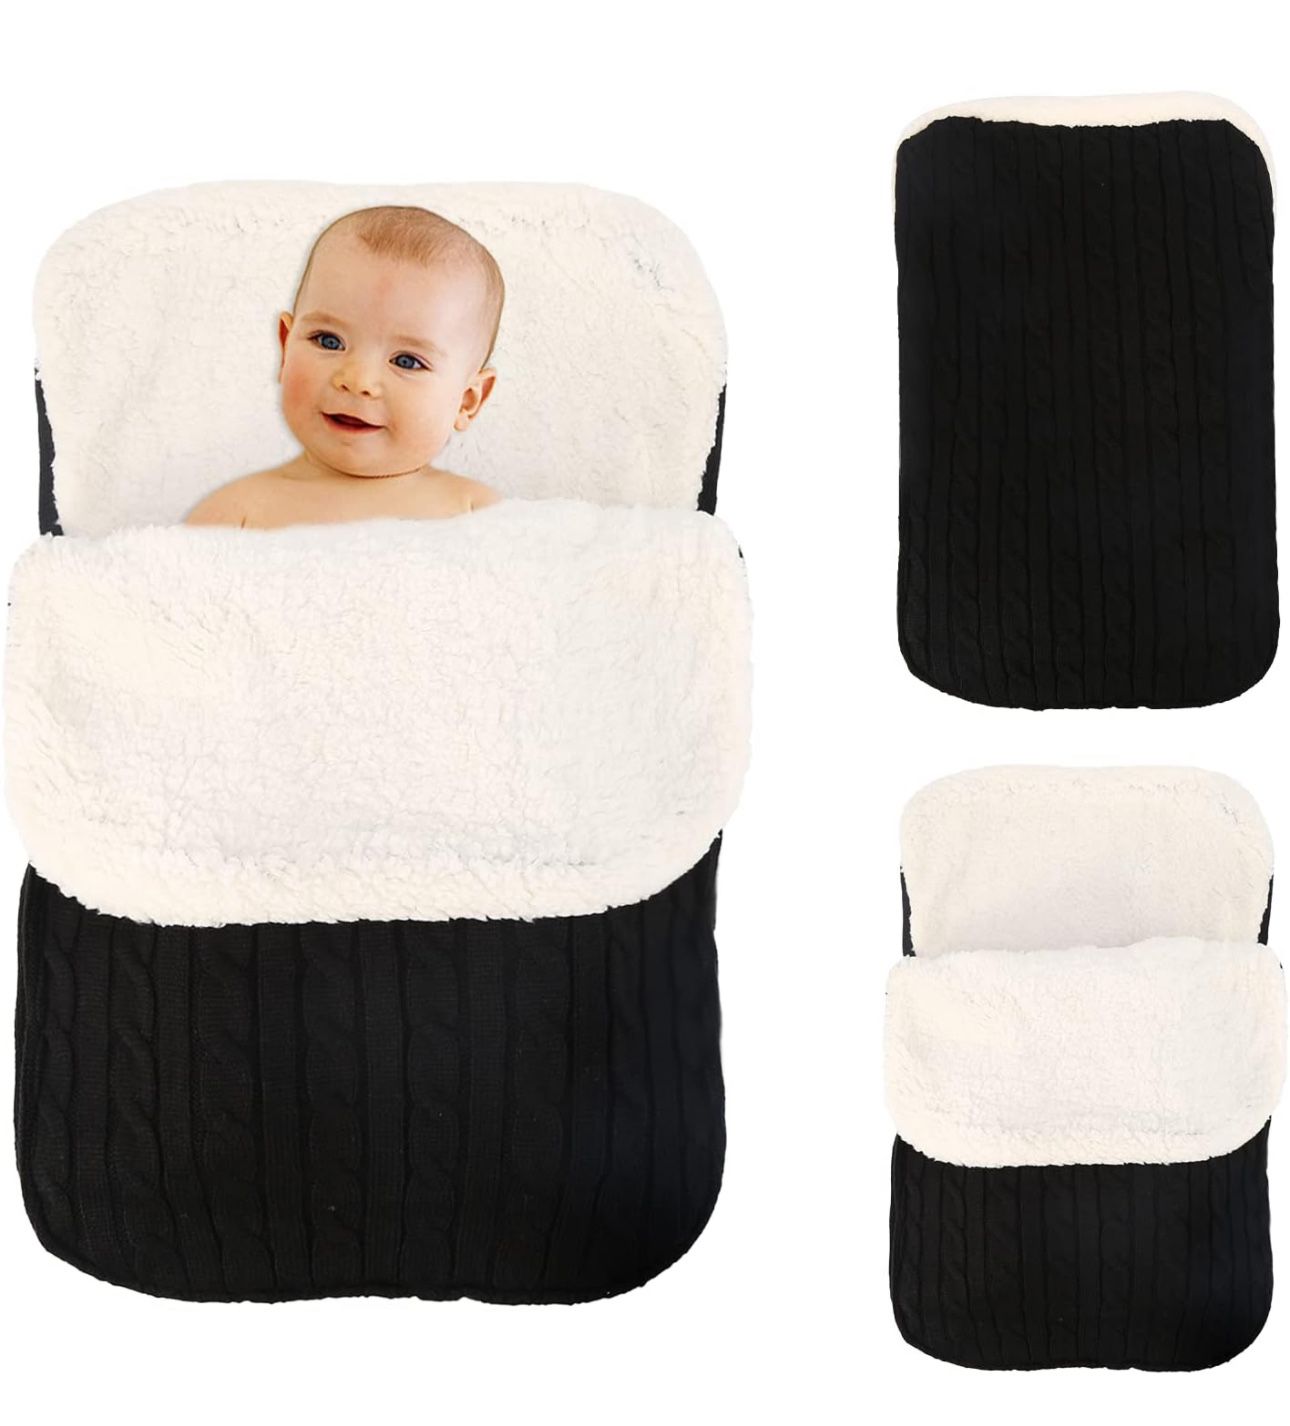 oenbopo Newborn Baby Swaddle Blanket Wrap, Thick Baby Kids Toddler Knit Soft Warm Fleece Blanket Swaddle Sleeping Bag Sack Sleep Bag Stroller Unisex W